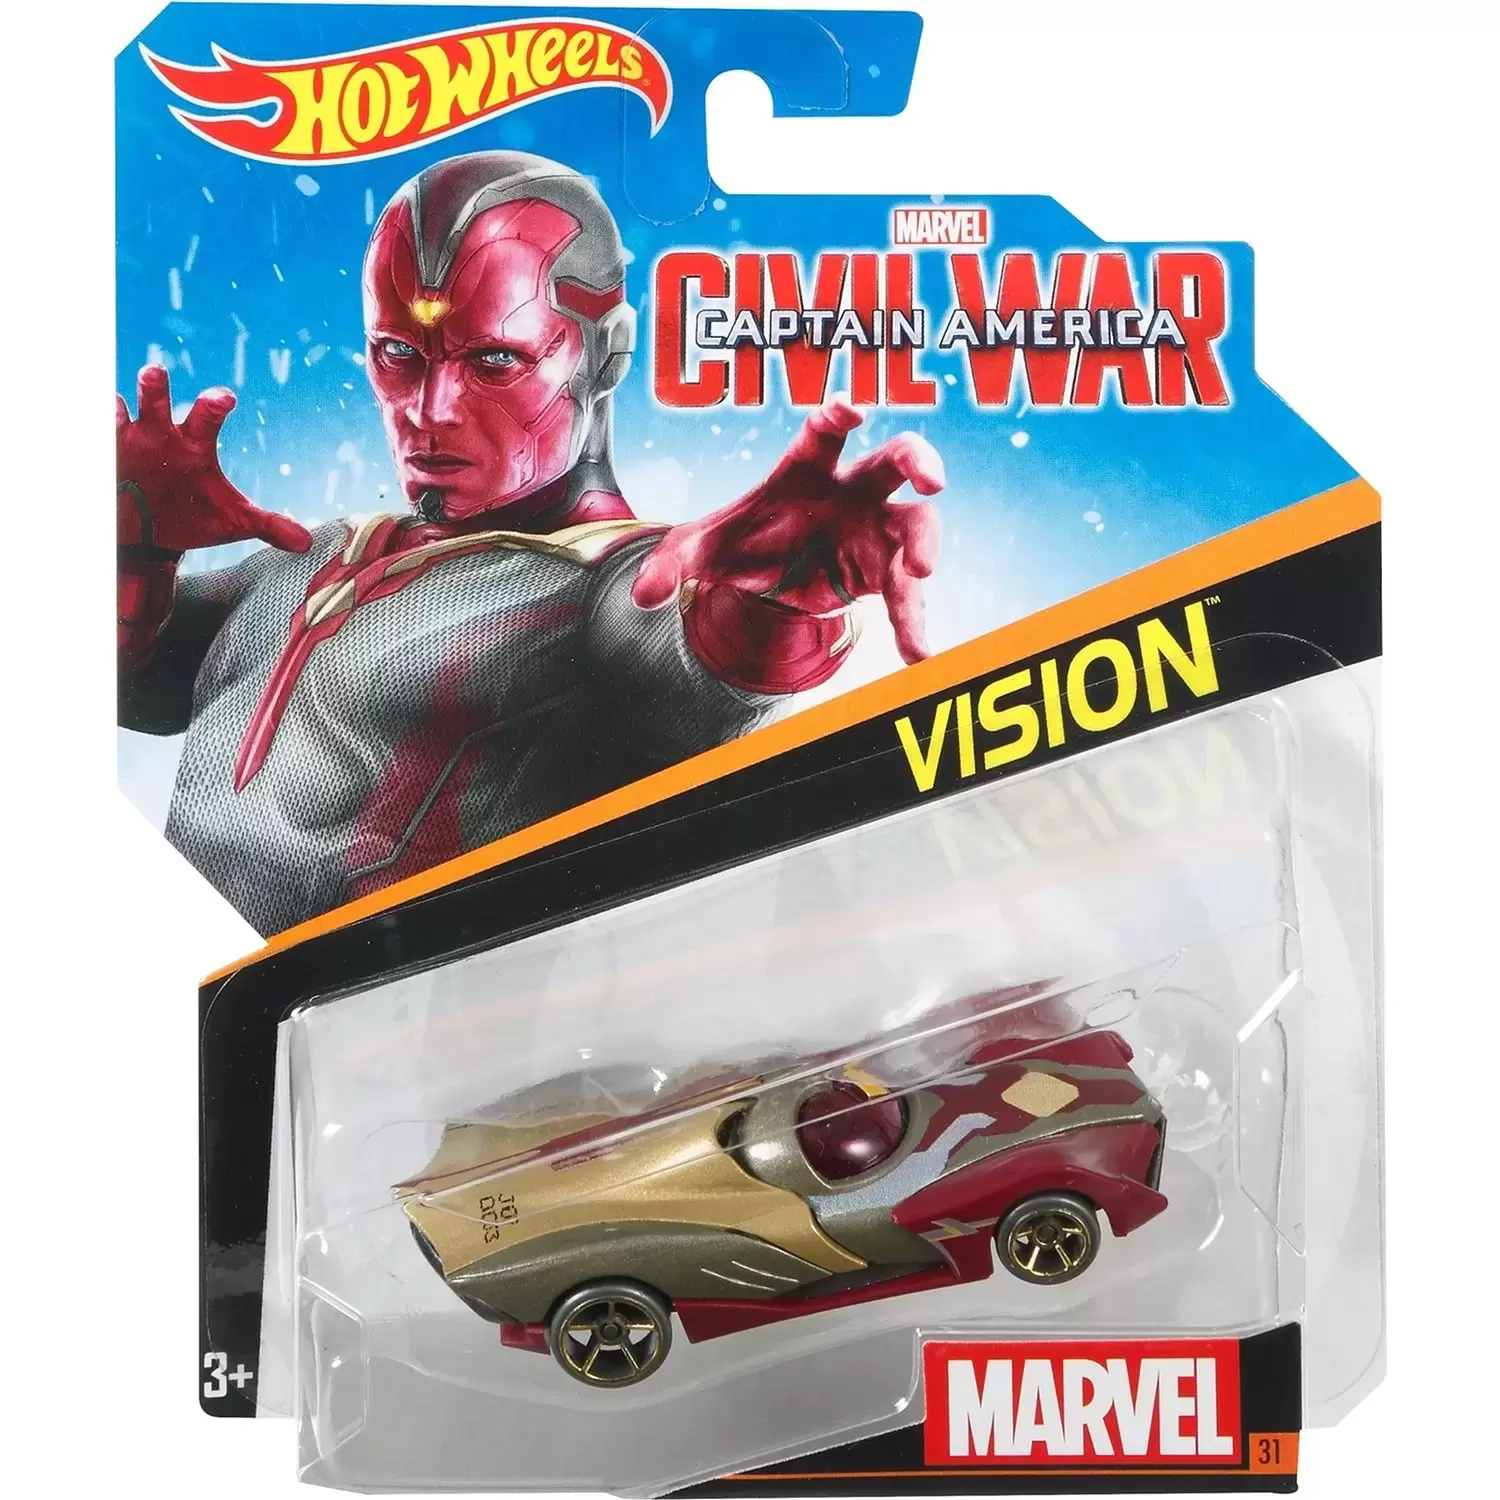 Marvel Character Cars - Captain America Civil War - Vision